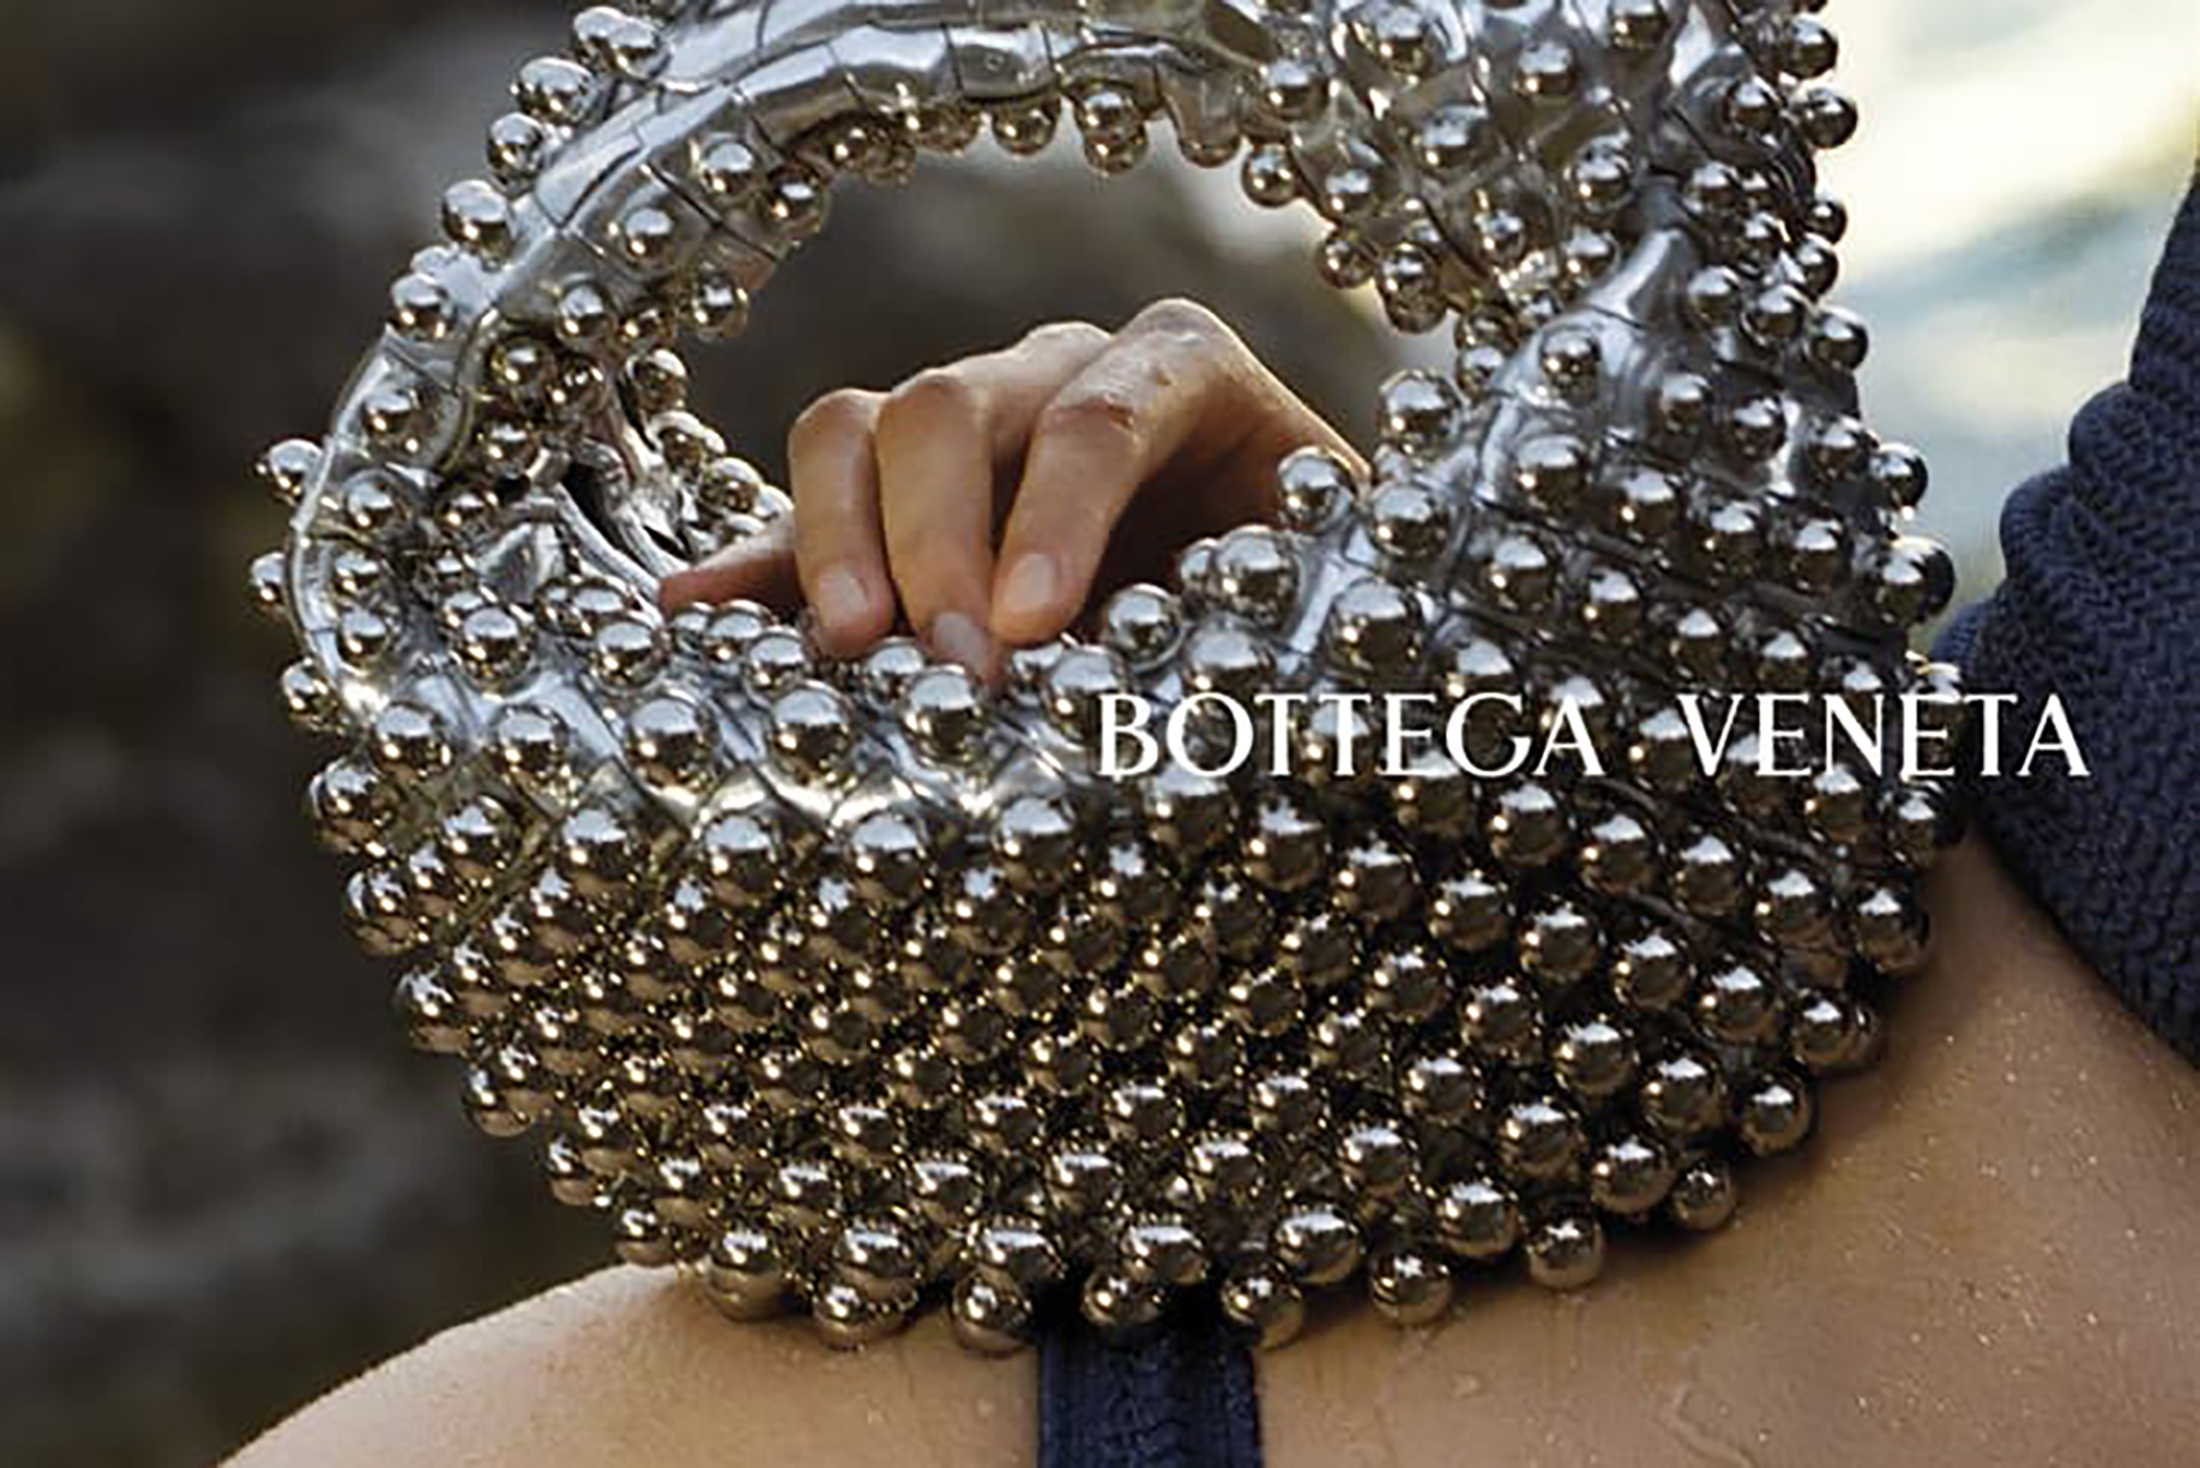 Bottega Veneta Summer 2023 campaign